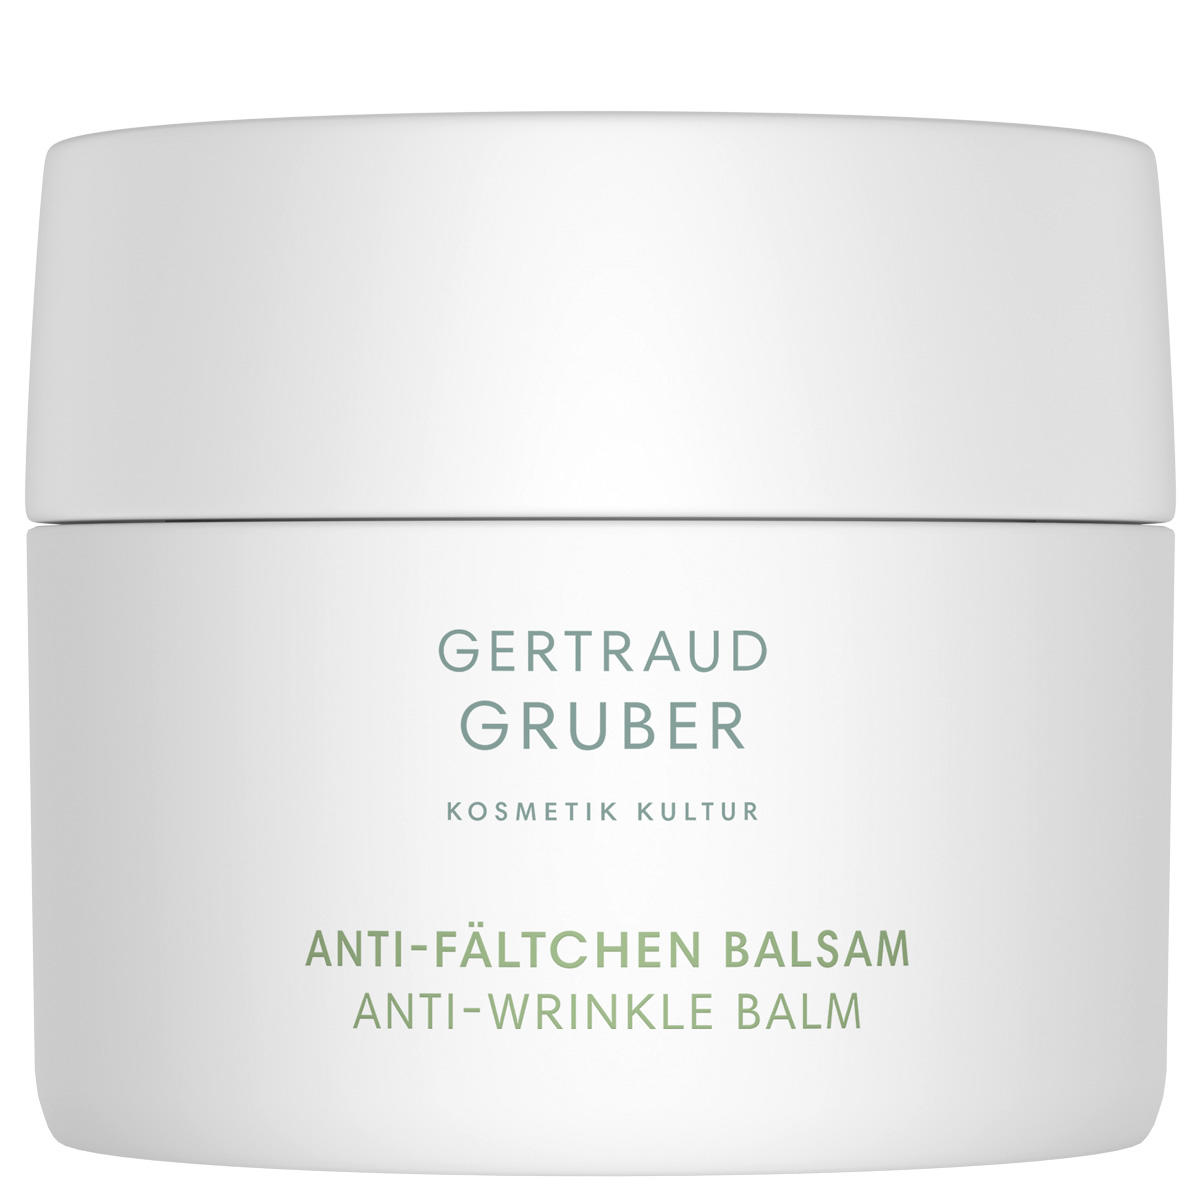 GERTRAUD GRUBER Anti-wrinkle balm 50 ml - 1